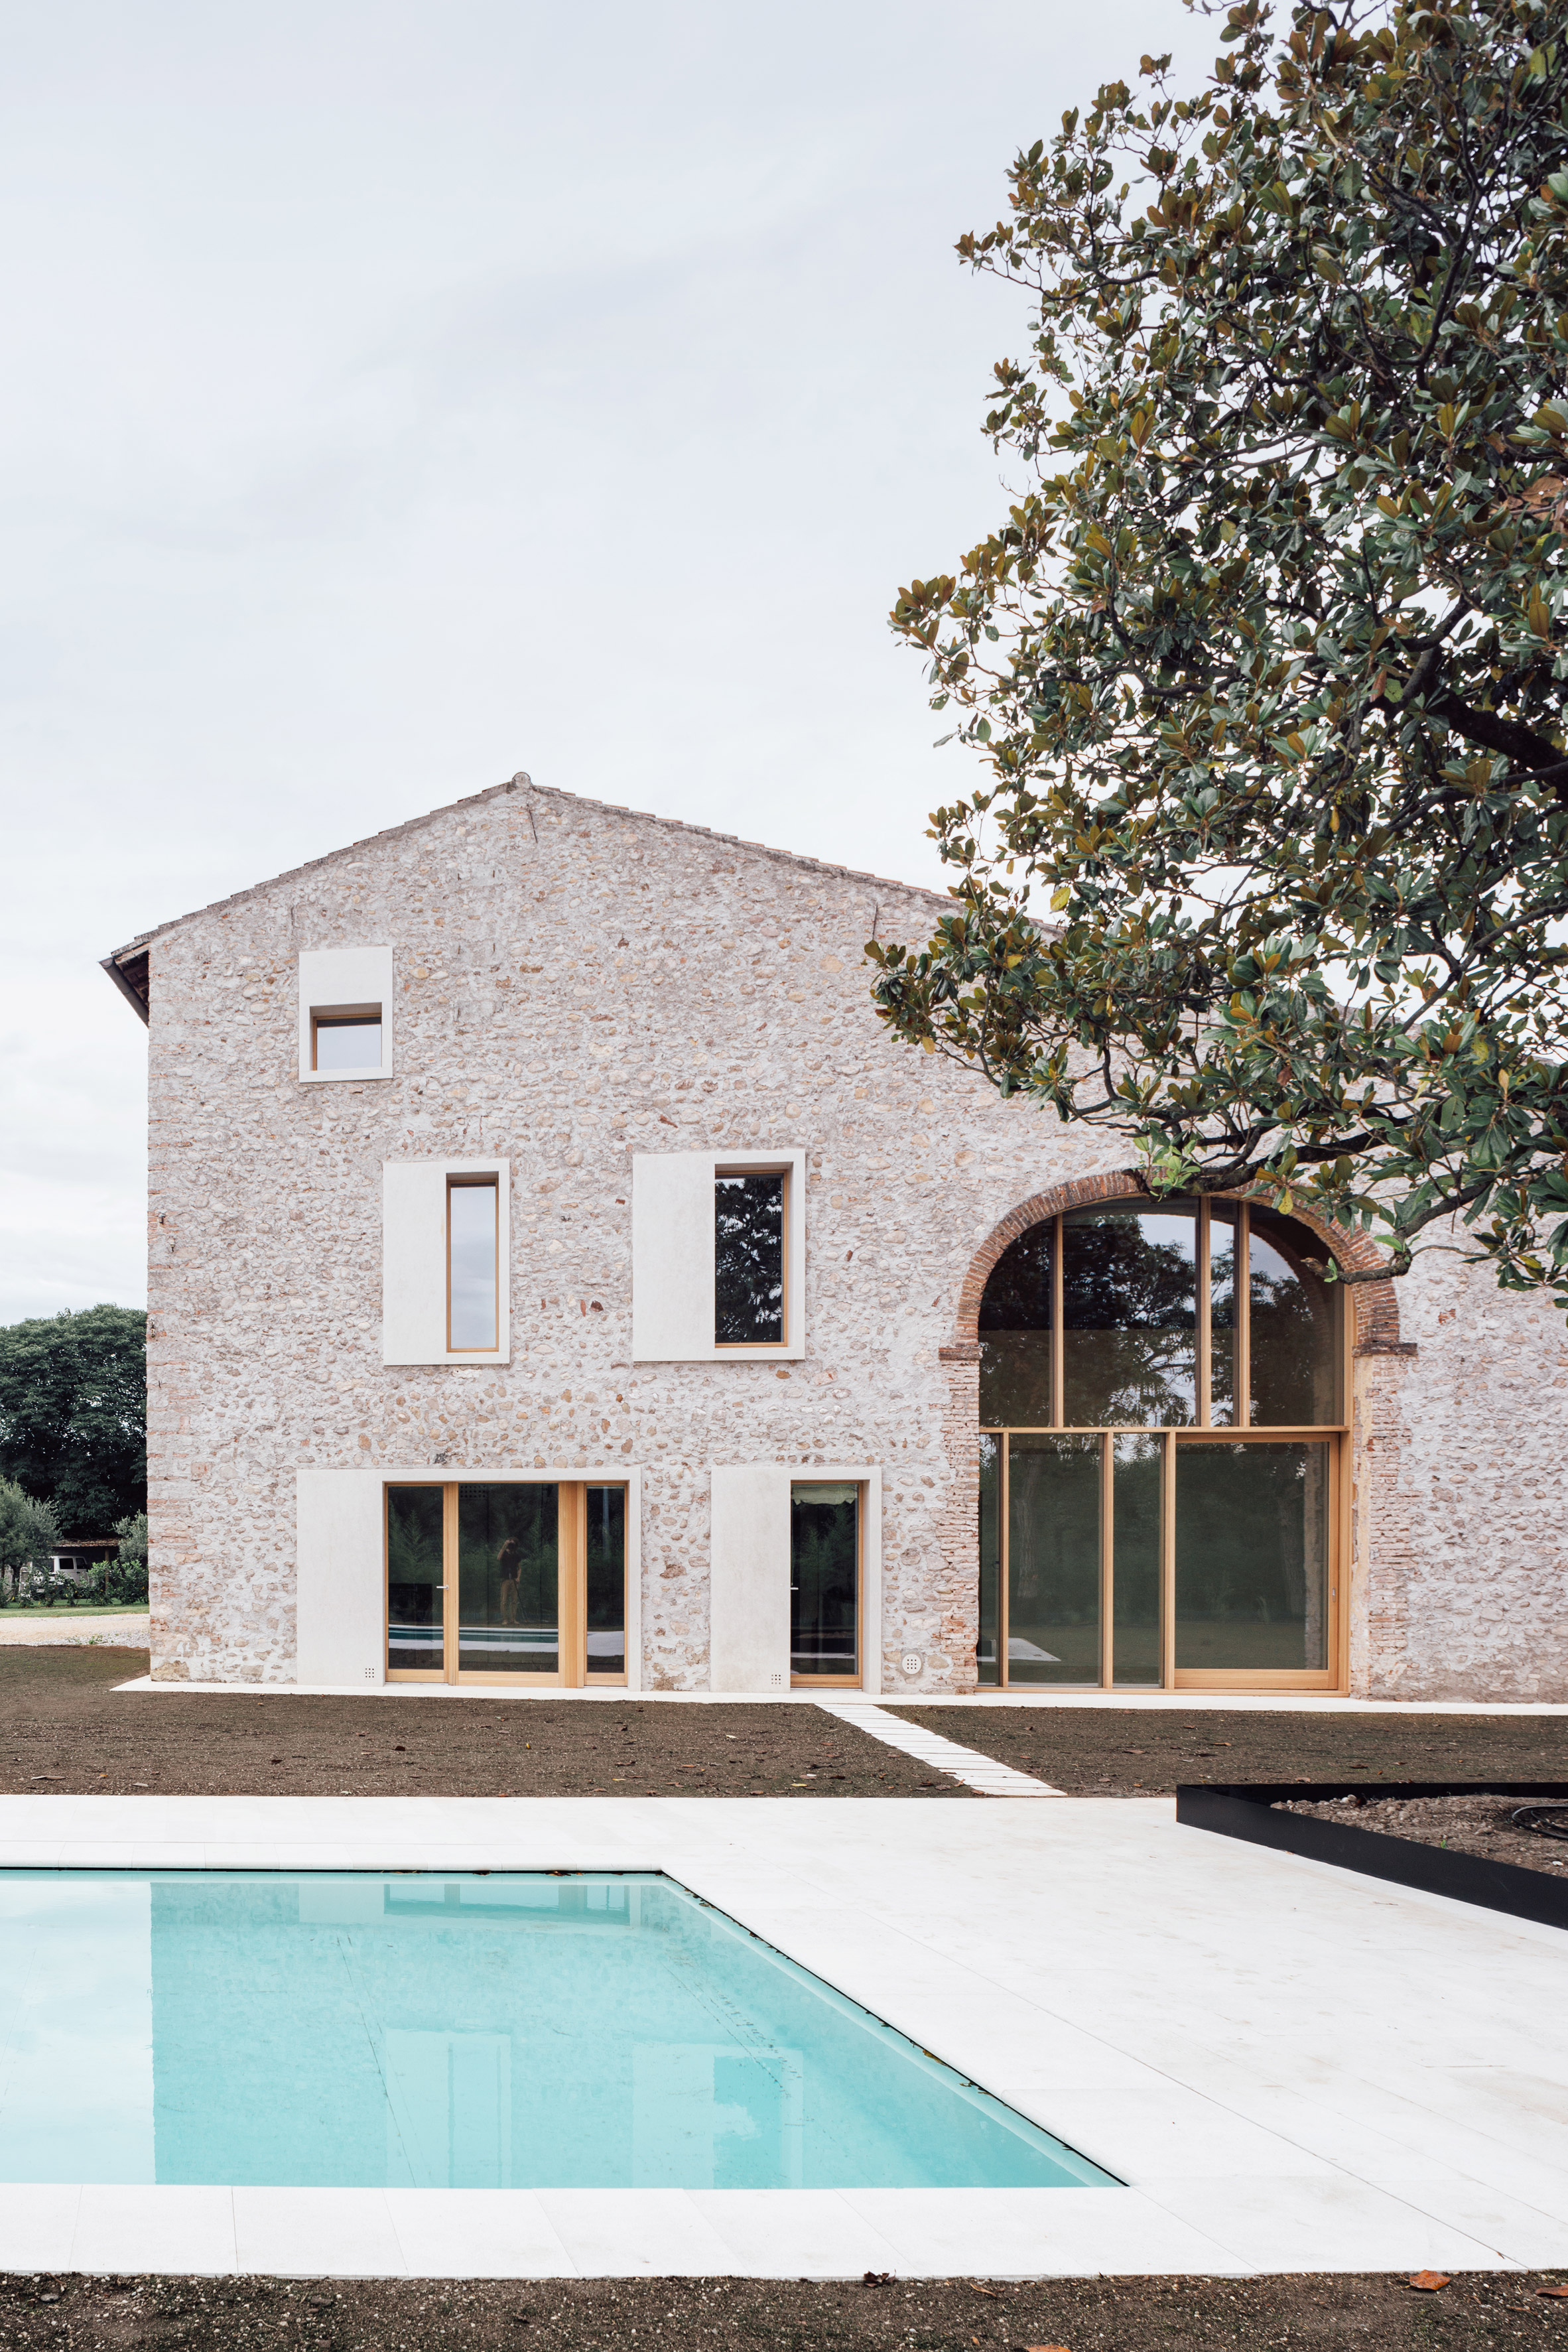 Country home in Chievo, Verona by Studio Wok